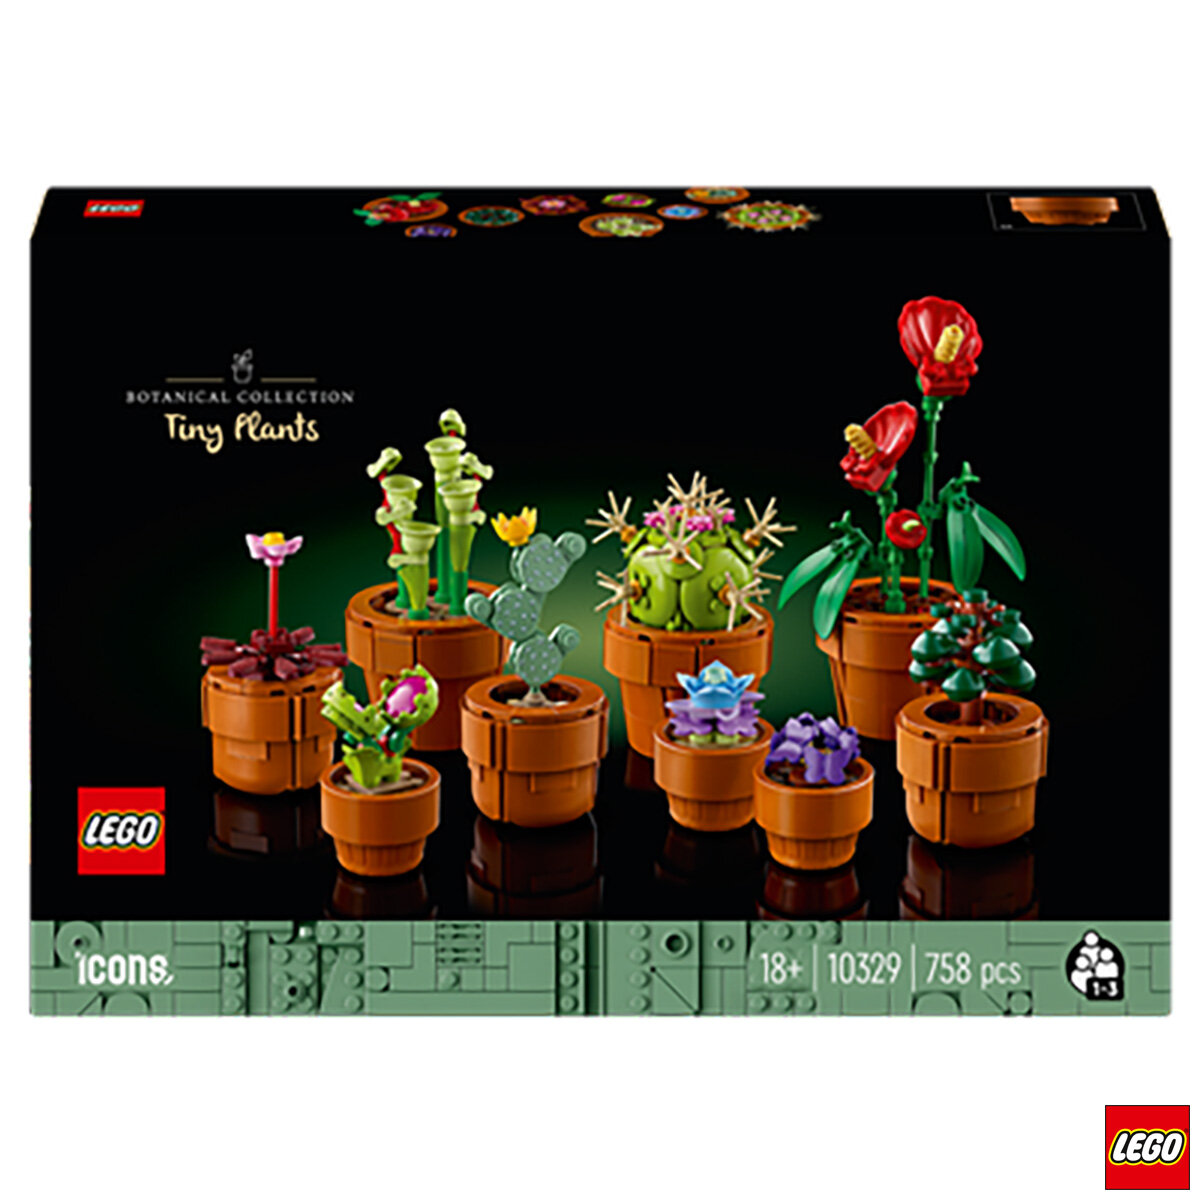 LEGO Icons Tiny Plants Box Image